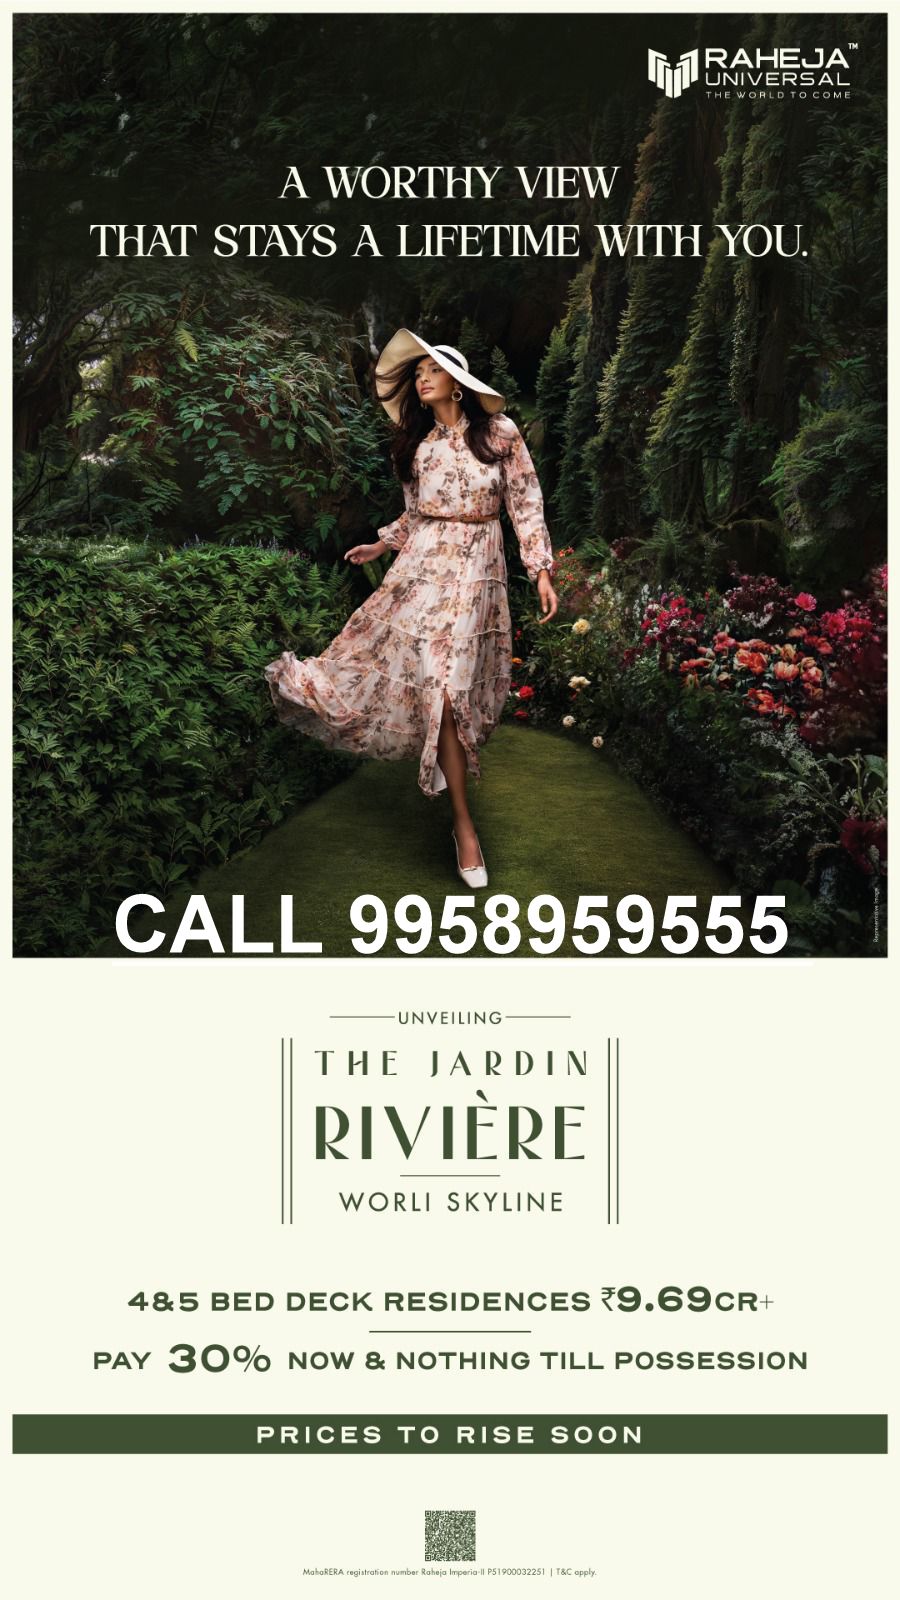 The Jardin Riviere, Worli Skyline by Raheja Universal